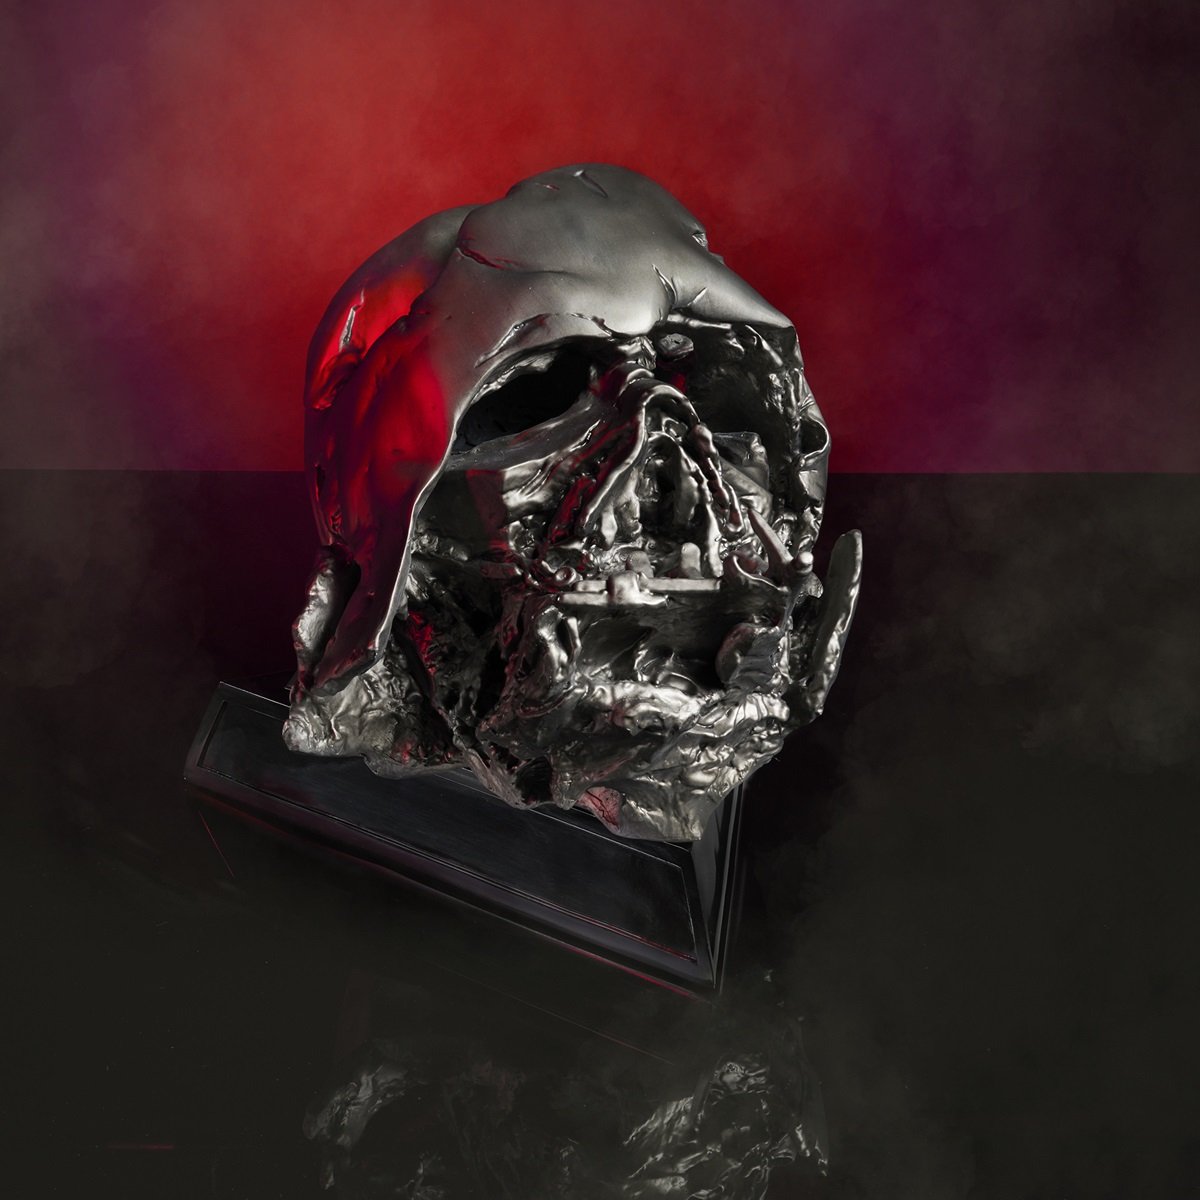 Darth Vader pyre helmet, glamour shot.